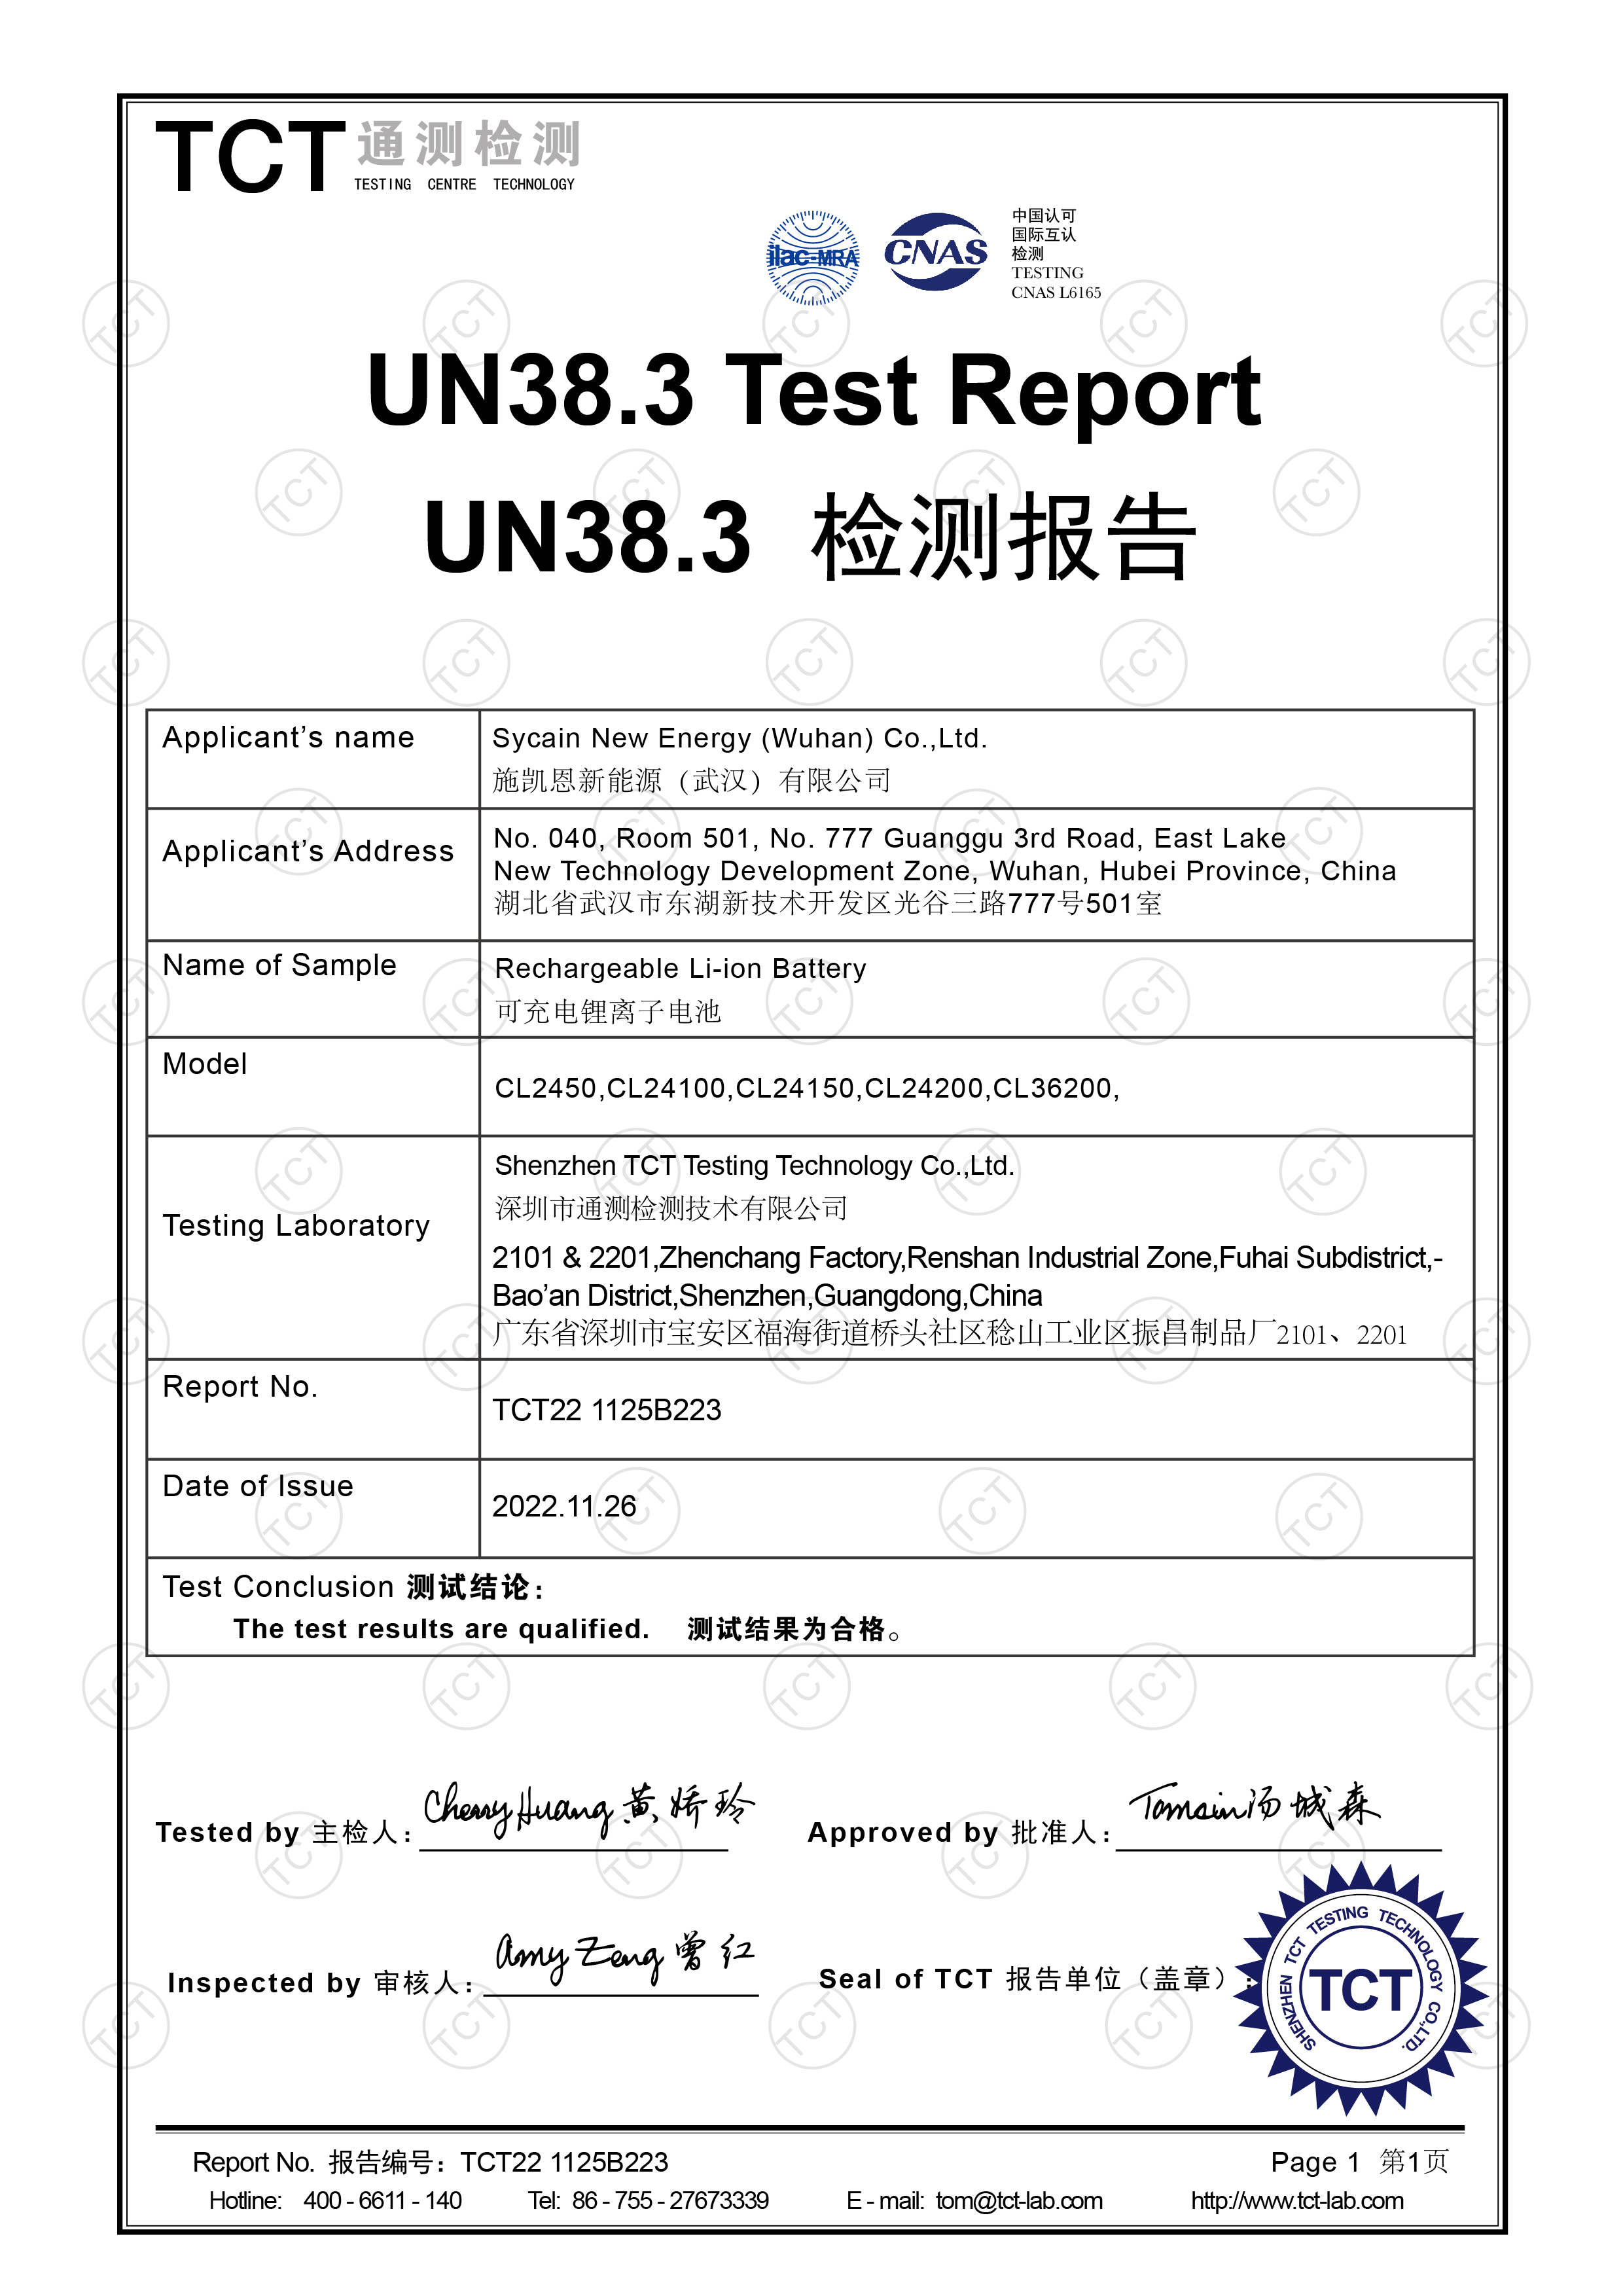 SYCAIN-Lithium-battery-certification-un383